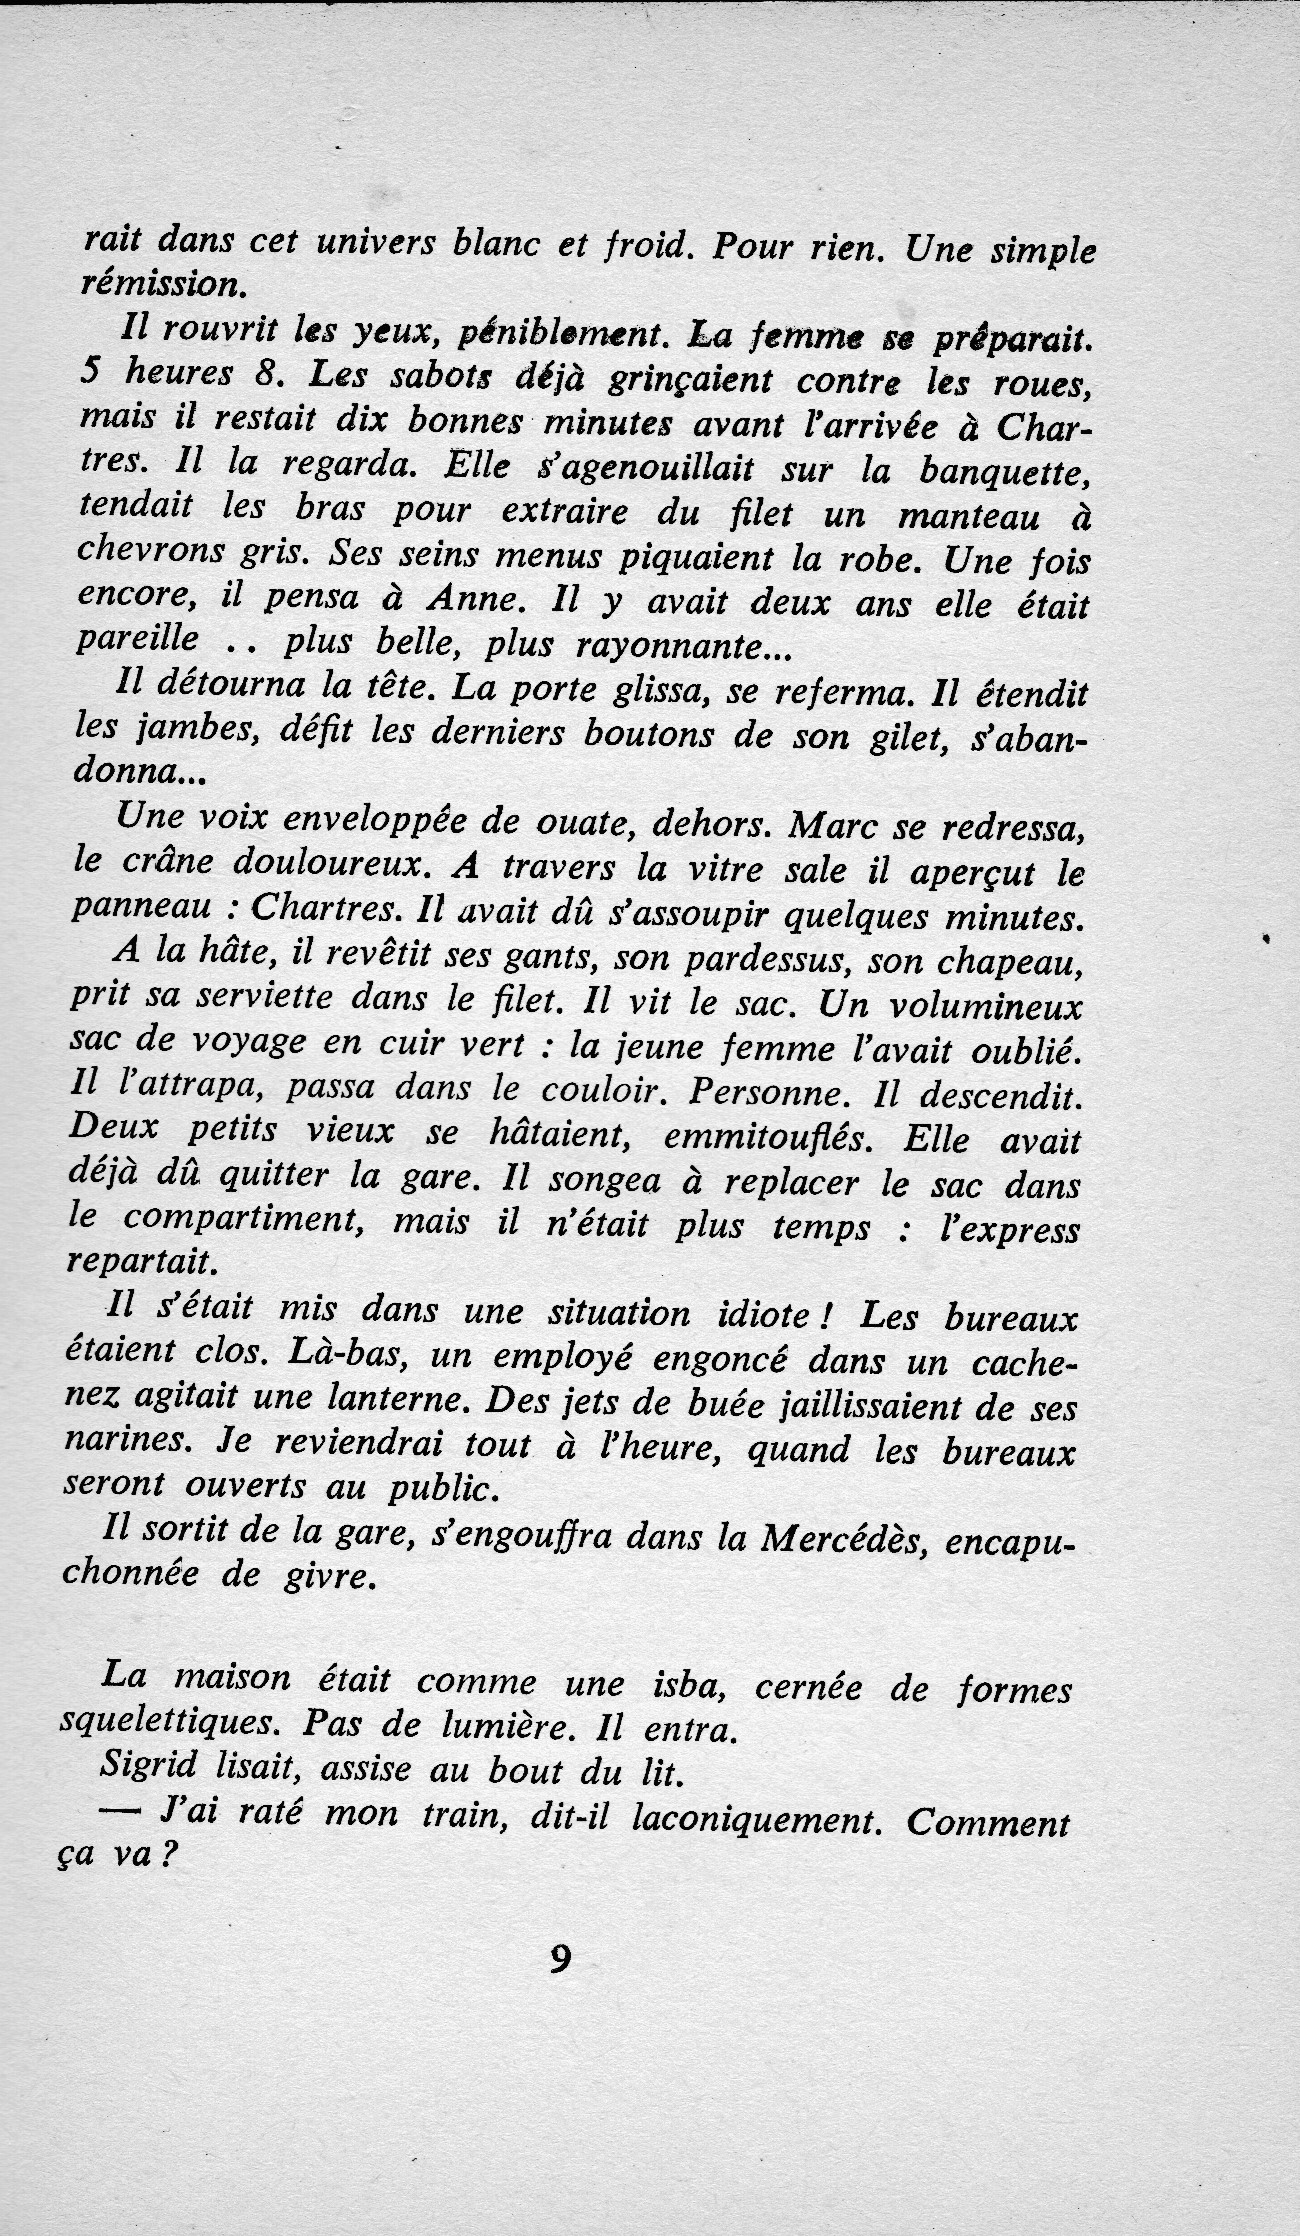 Aliéna, Denoël (1968) - 1er chapitre offert - 3